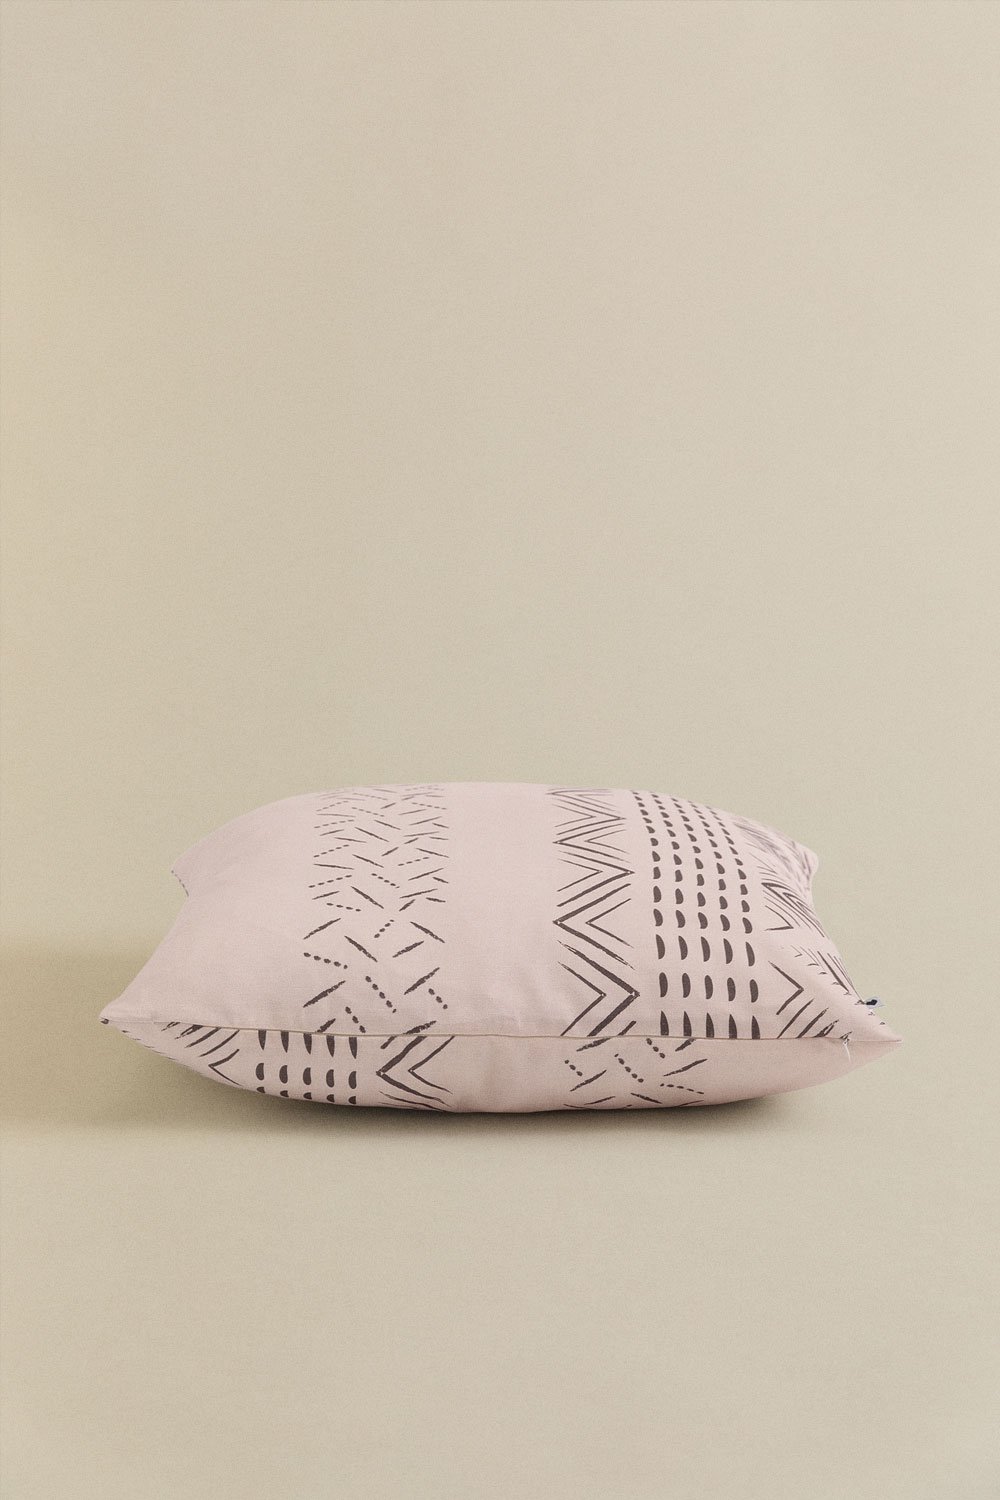 Federa per cuscino quadrata in cotone (60x60 cm) Yojary Style - SKLUM